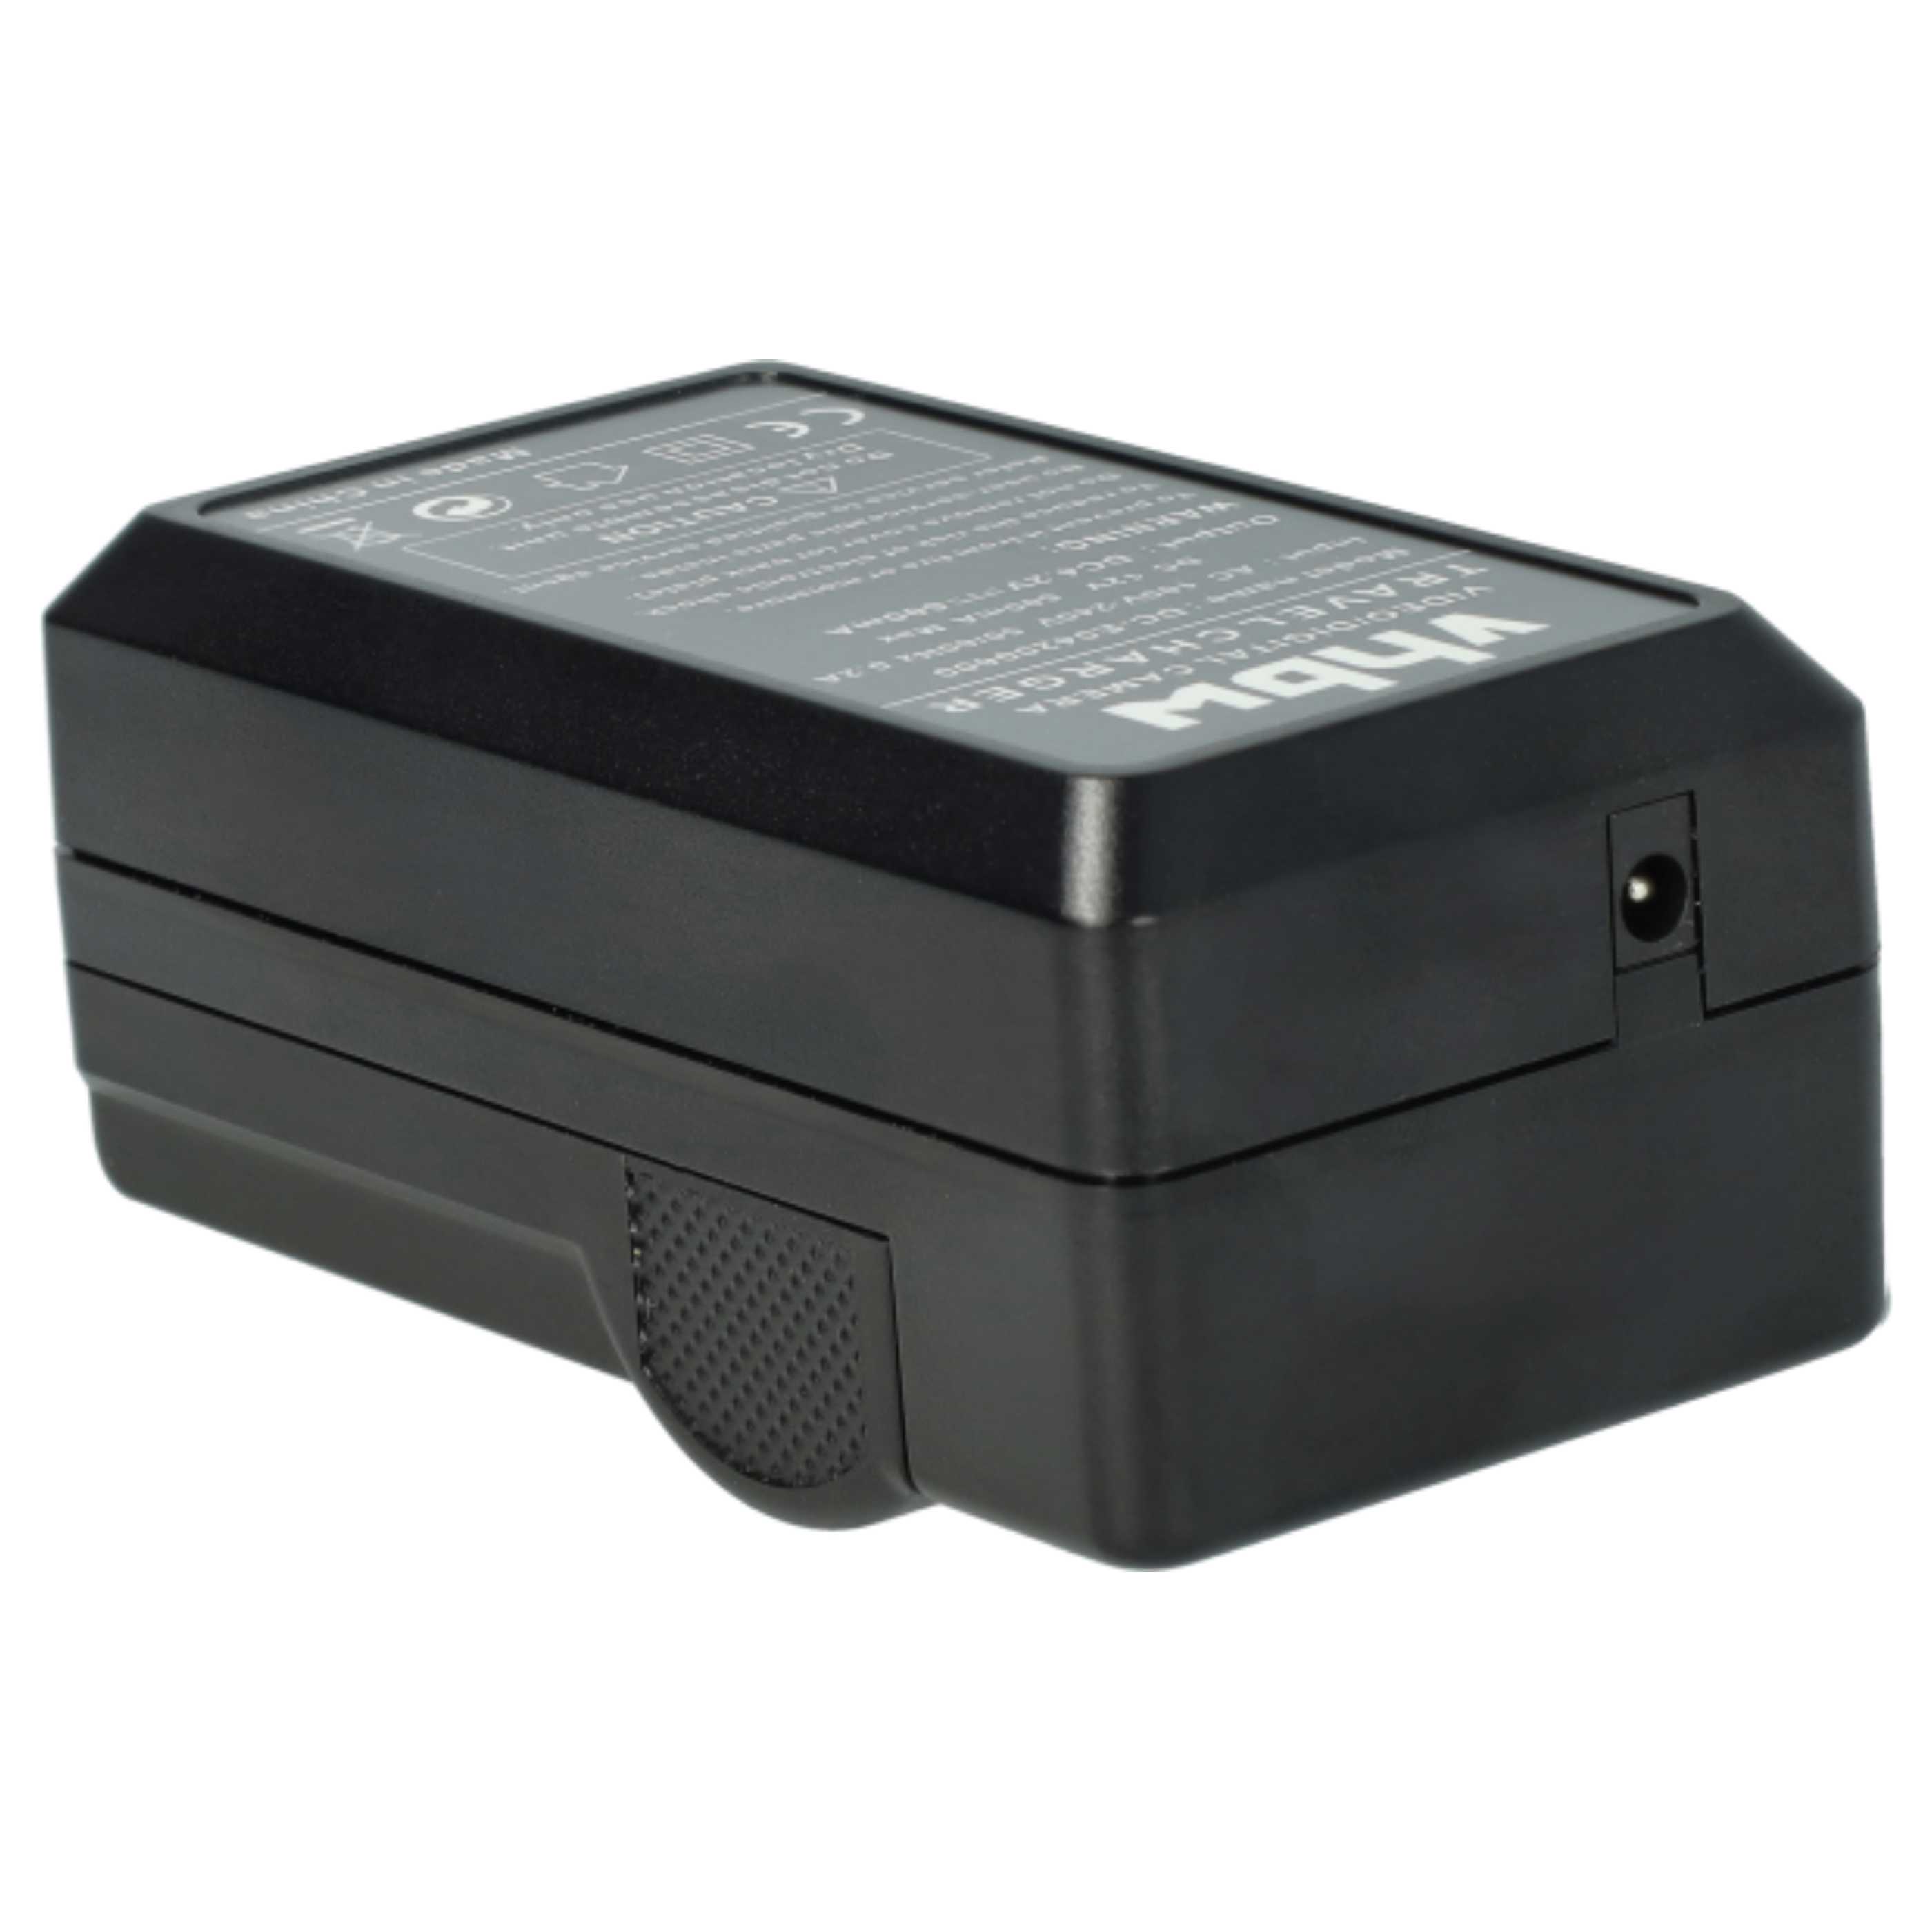 Akku Ladegerät passend für Optio S10 Kamera u.a. - 0,6 A, 4,2 V